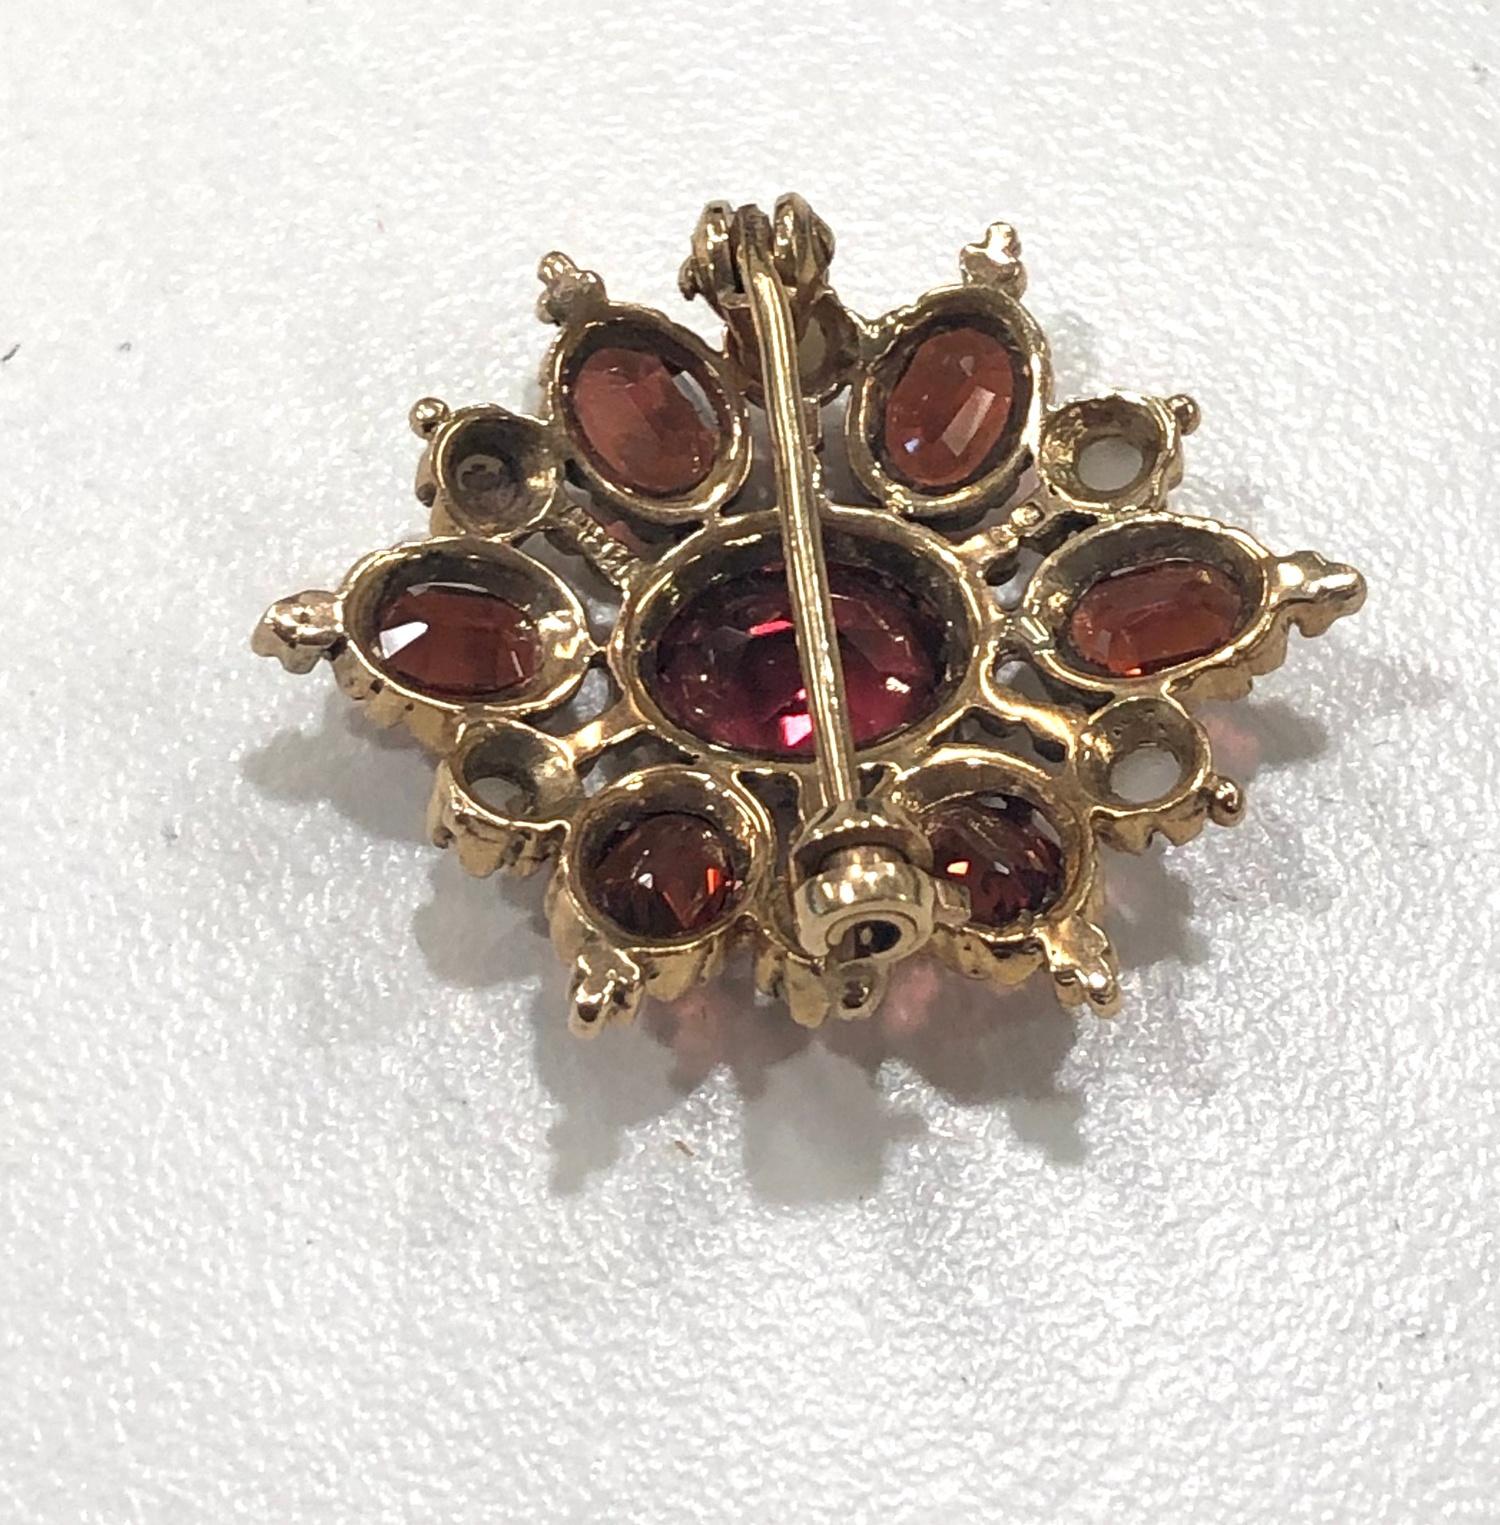 Vintage 1985 9ct gold Pyrope garnet and seed pearl brooch - Image 3 of 3